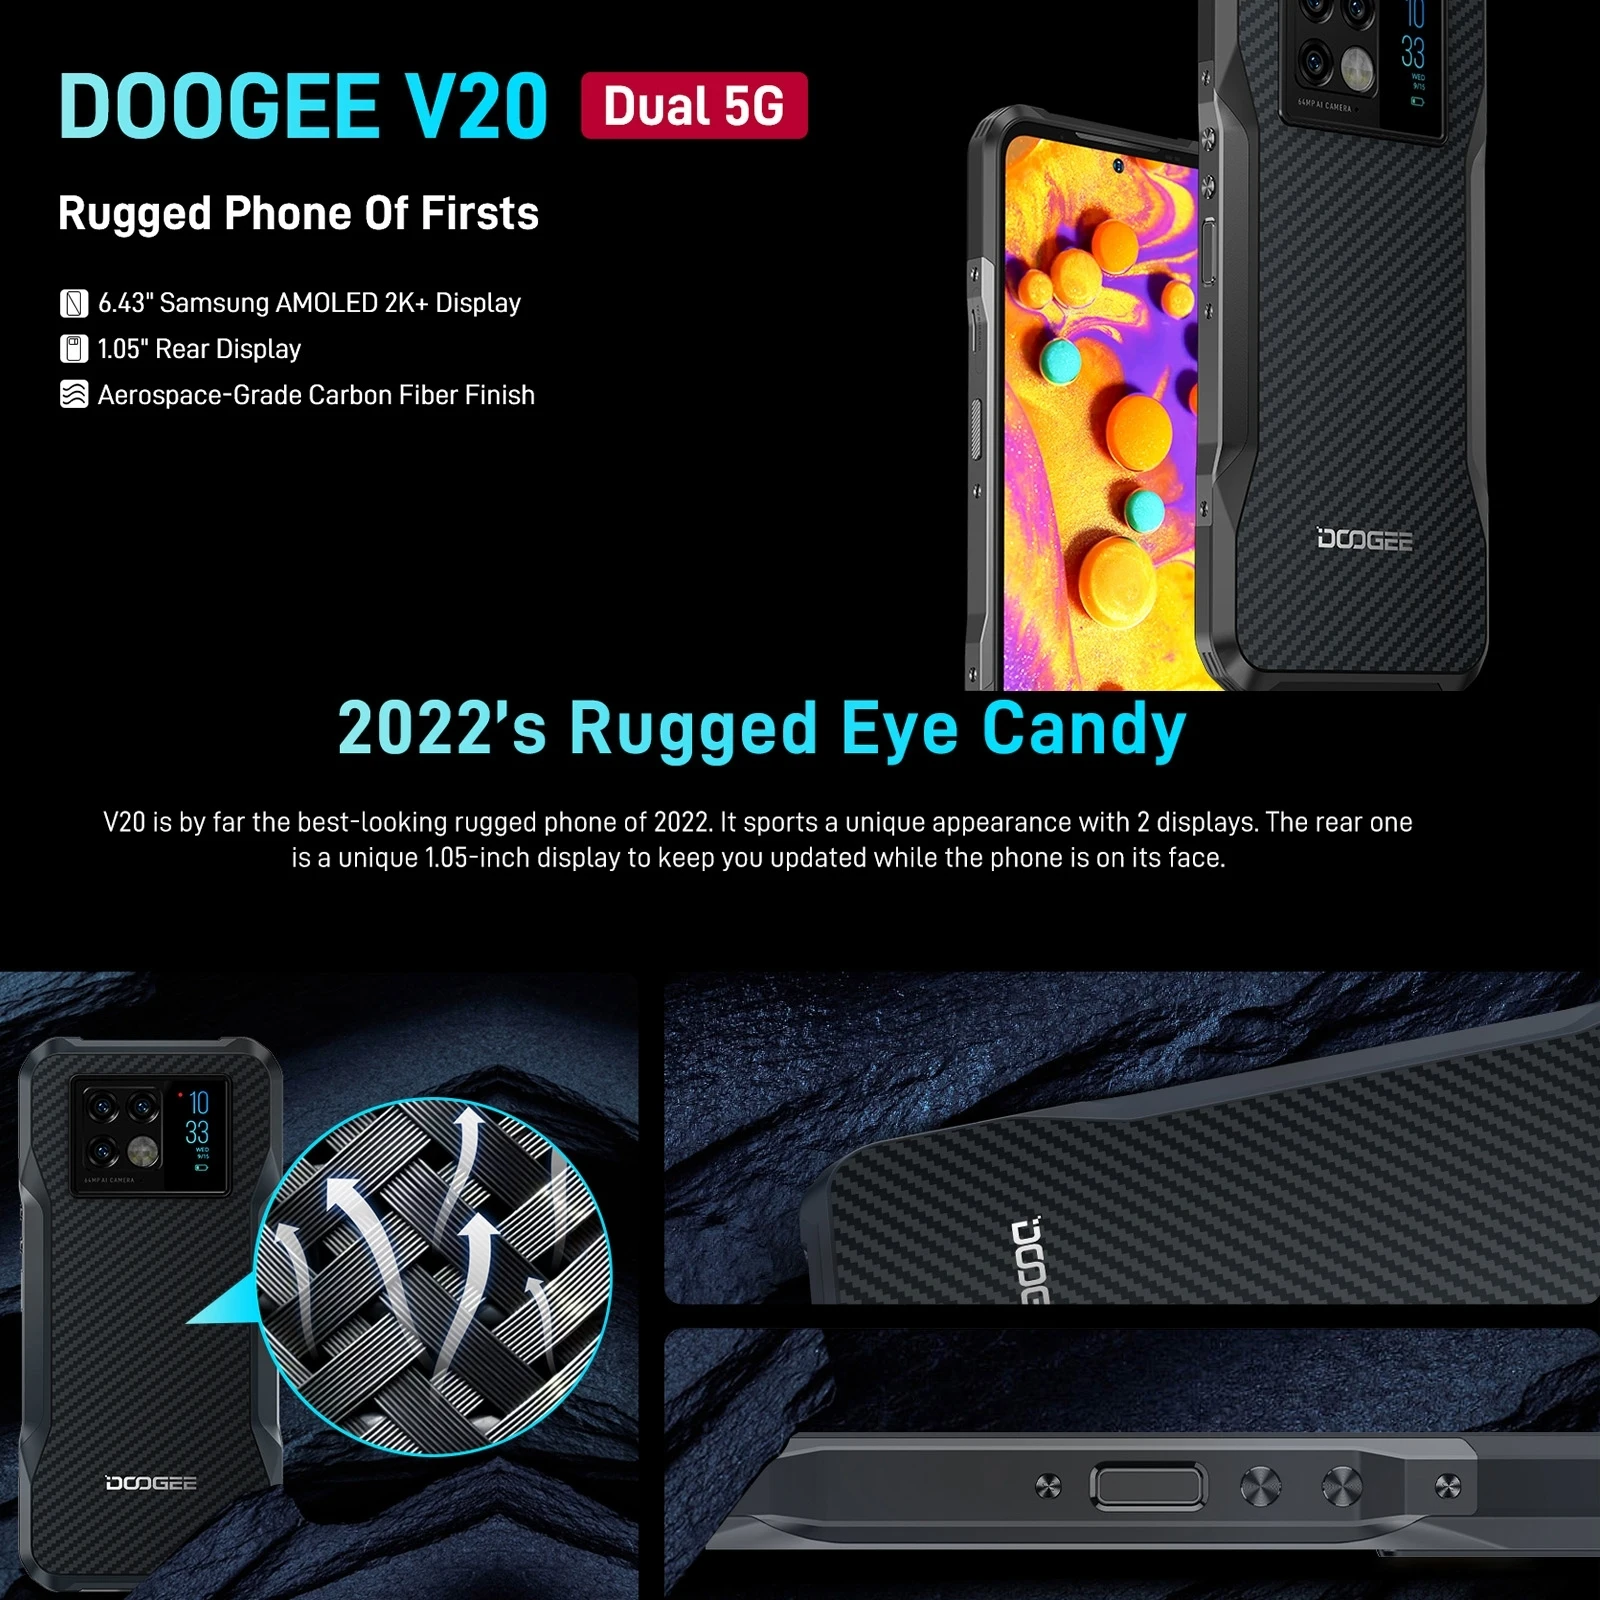 DOOGEE V20 Телефон Global 5G 4G 8GB 256GB 6000mAh 6,43 